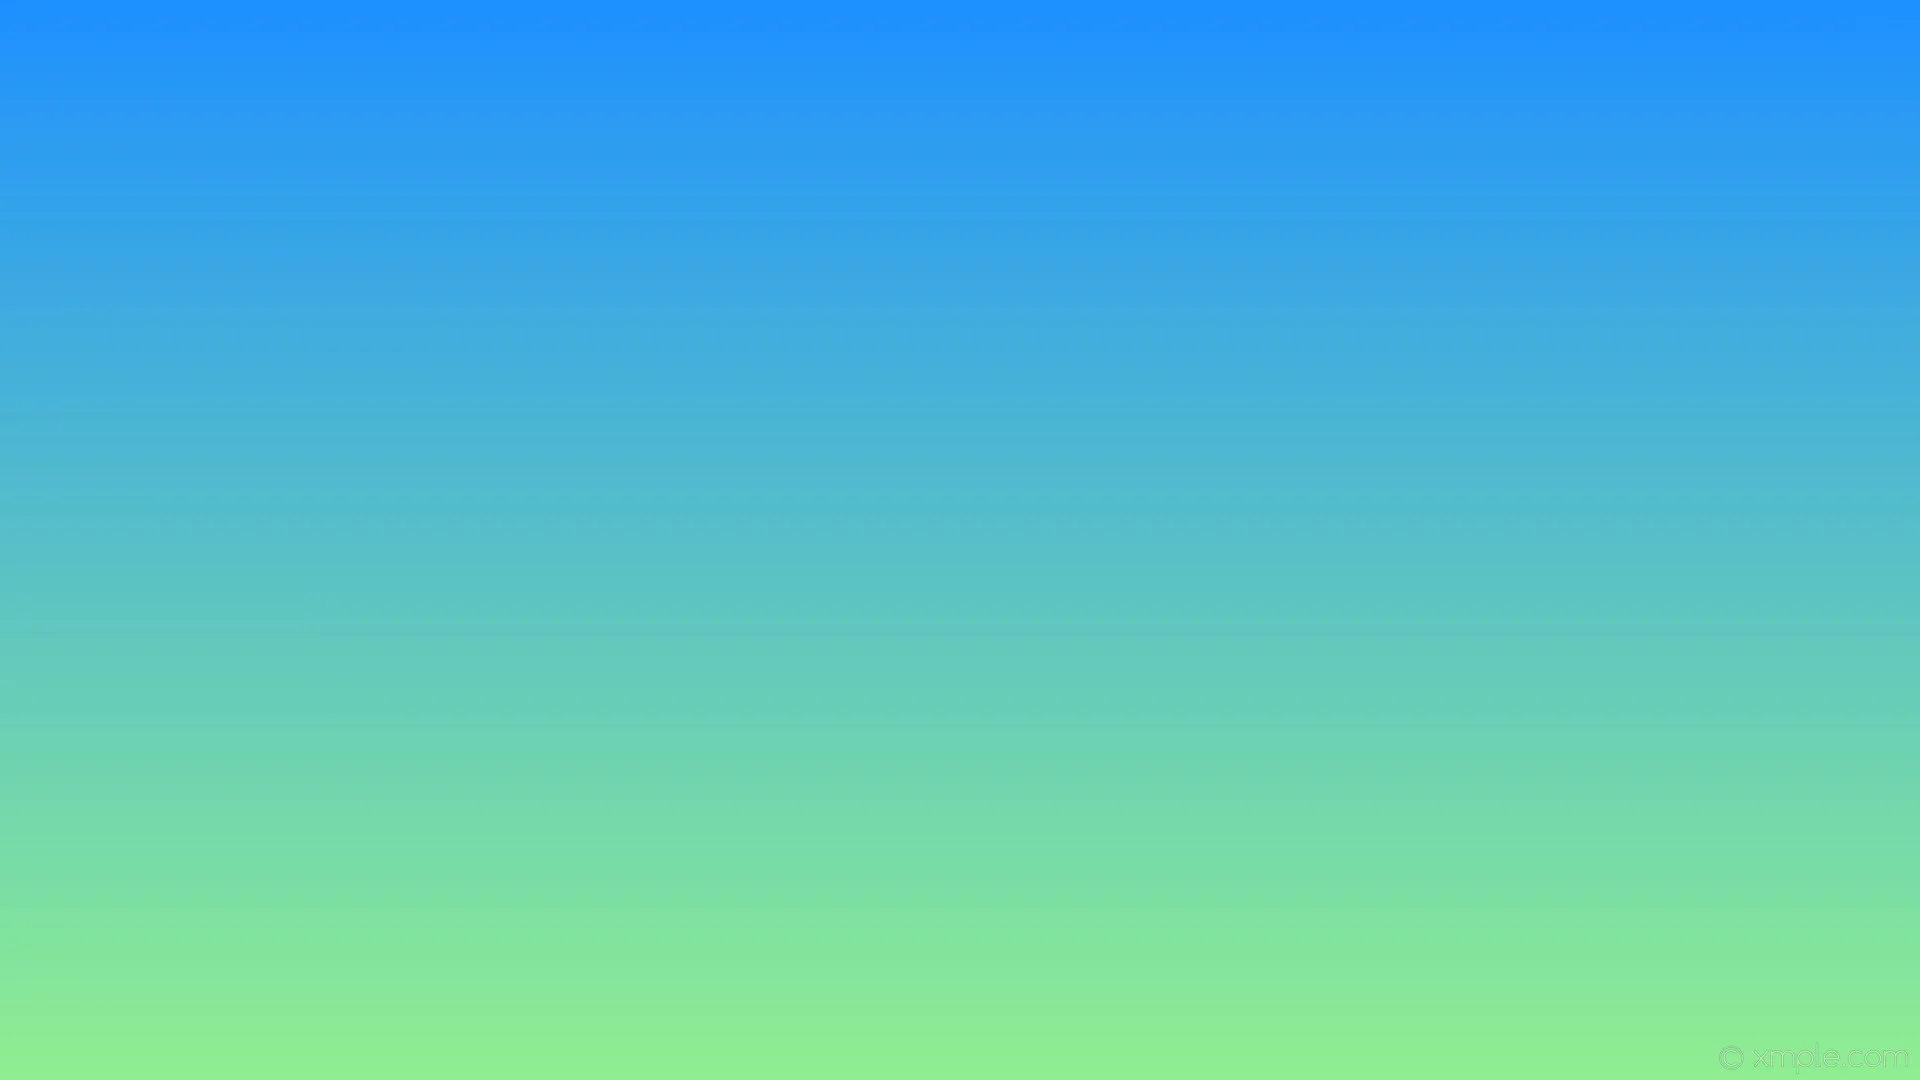 Wallpaper green blue gradient linear #87cefa #3cb371 105Â°